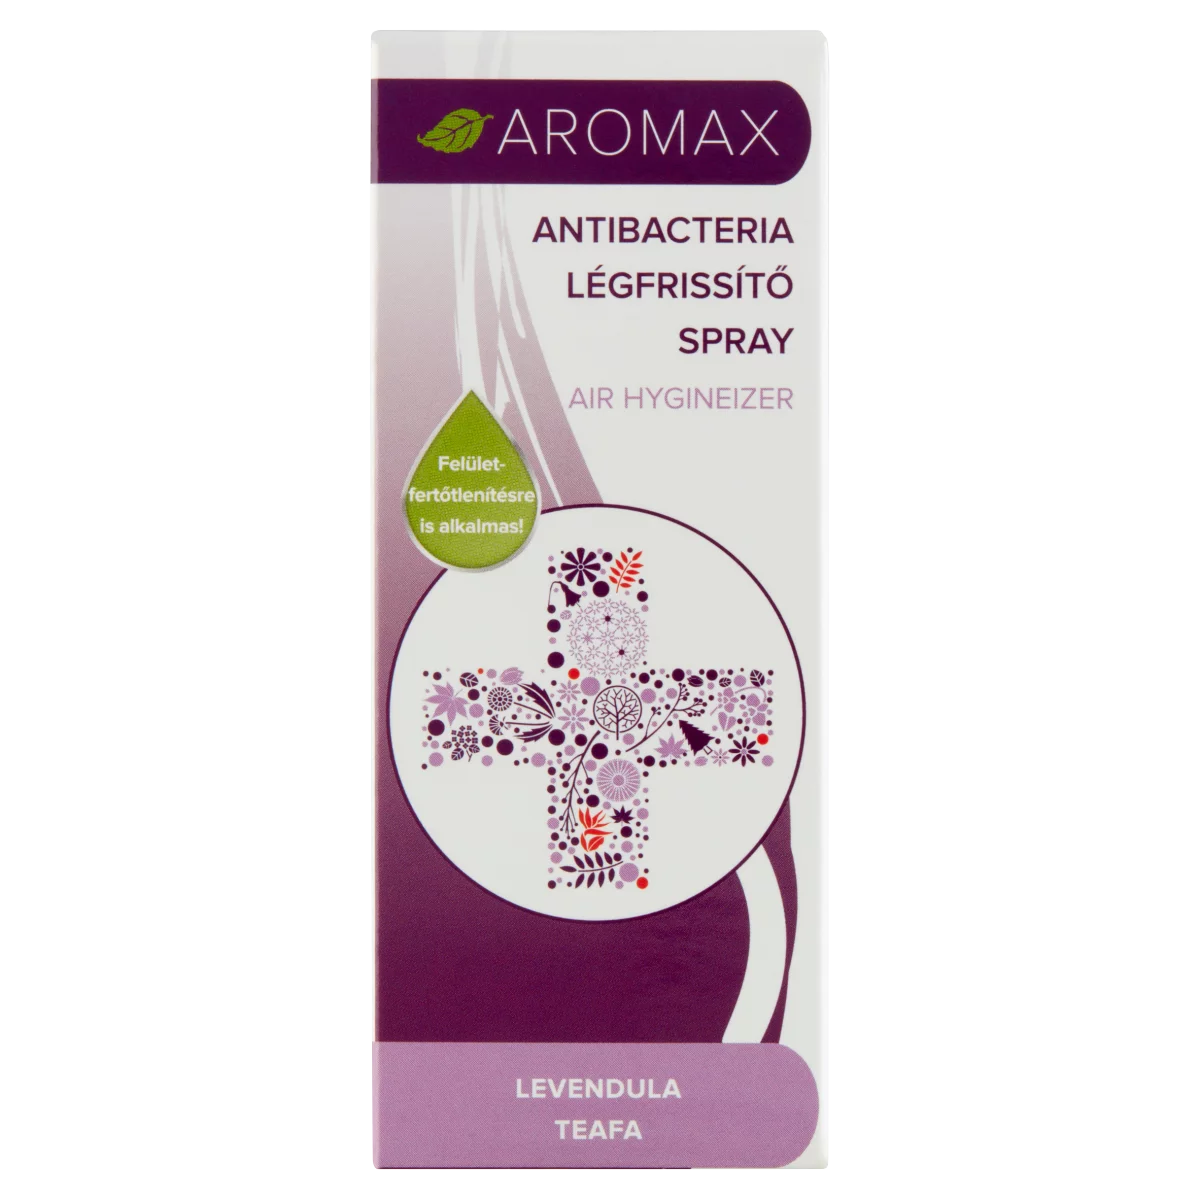 Aromax Antibacteria levendula-teafa légfrissítő spray 20 ml